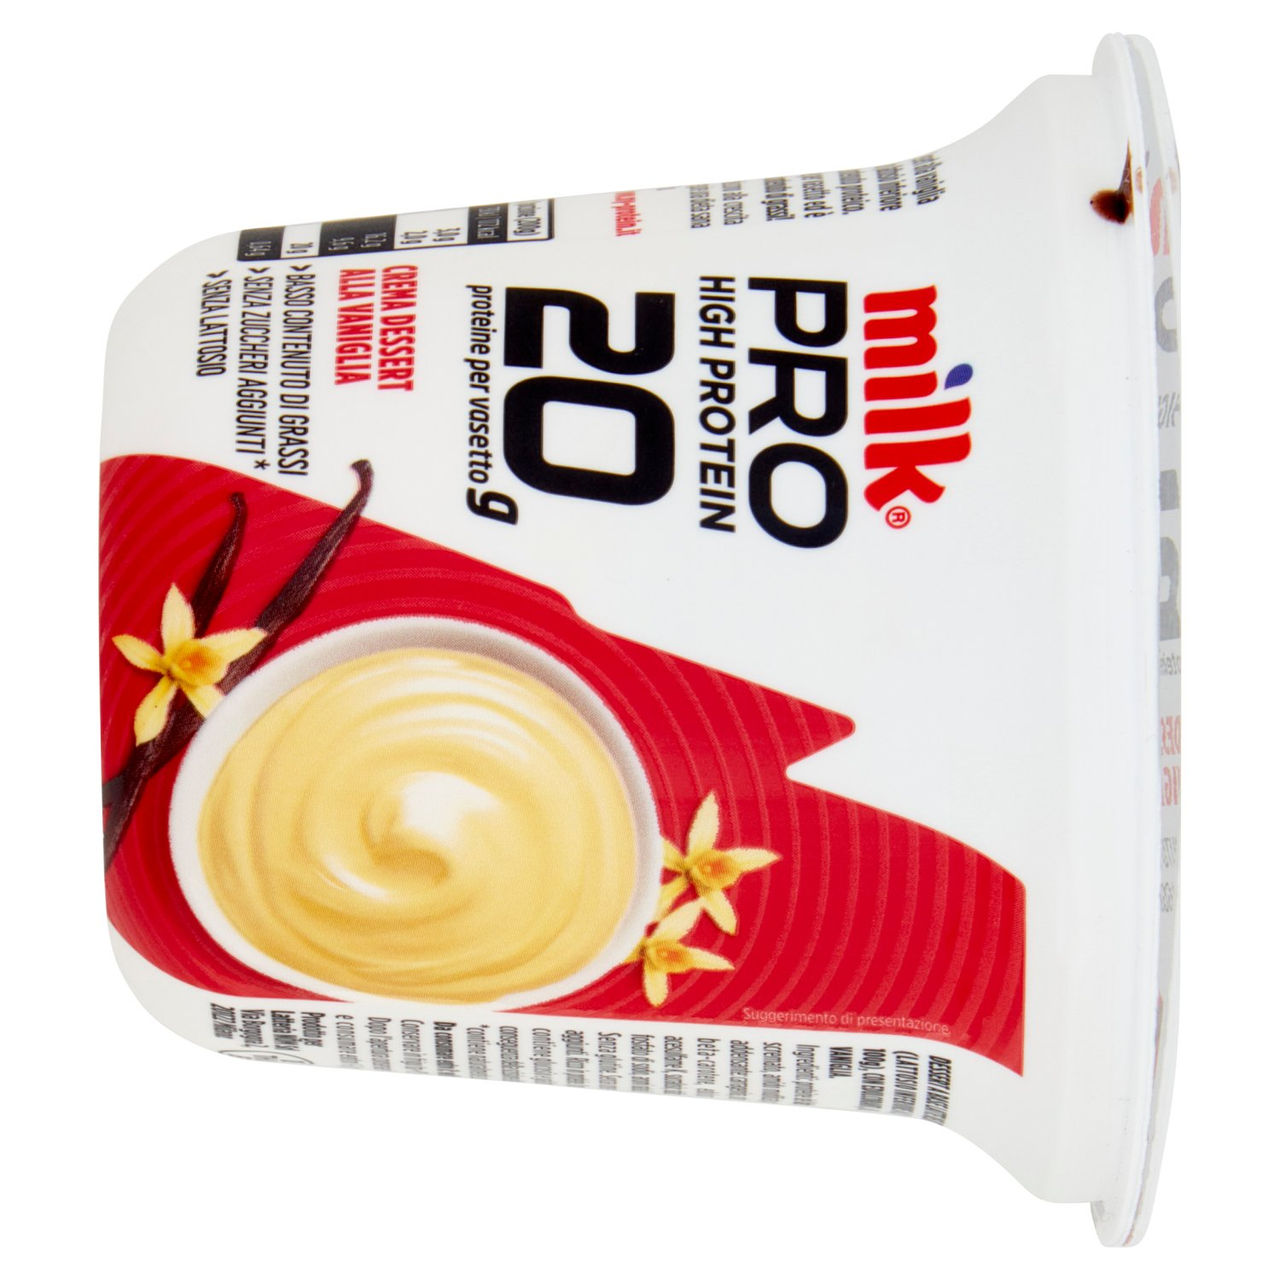 Milk Pro High Protein 20g Crema Dessert alla Vaniglia 200 g